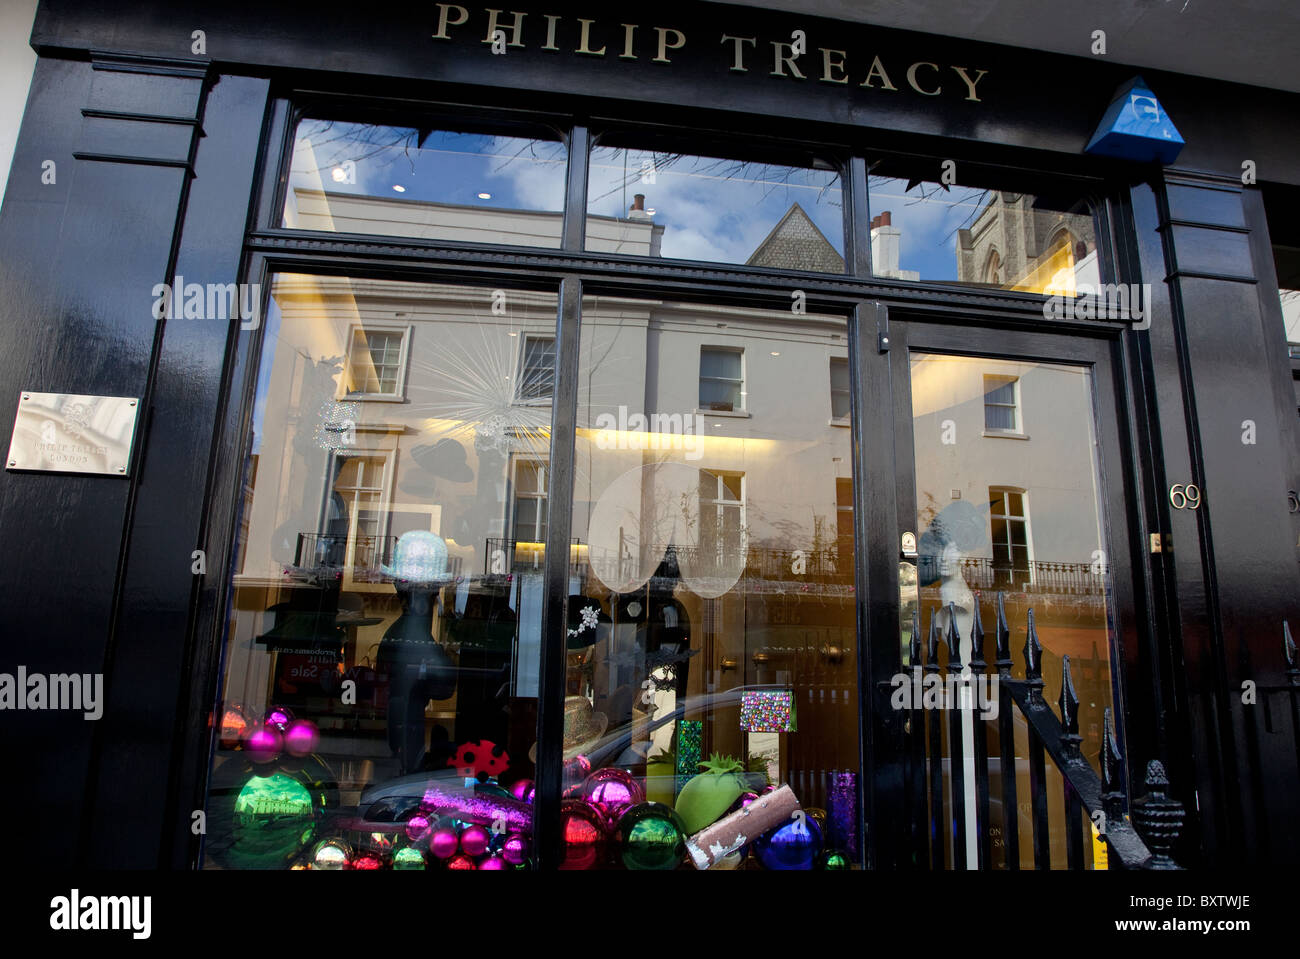 Philip Treacy hat shop, Belgravia, London Stock Photo - Alamy